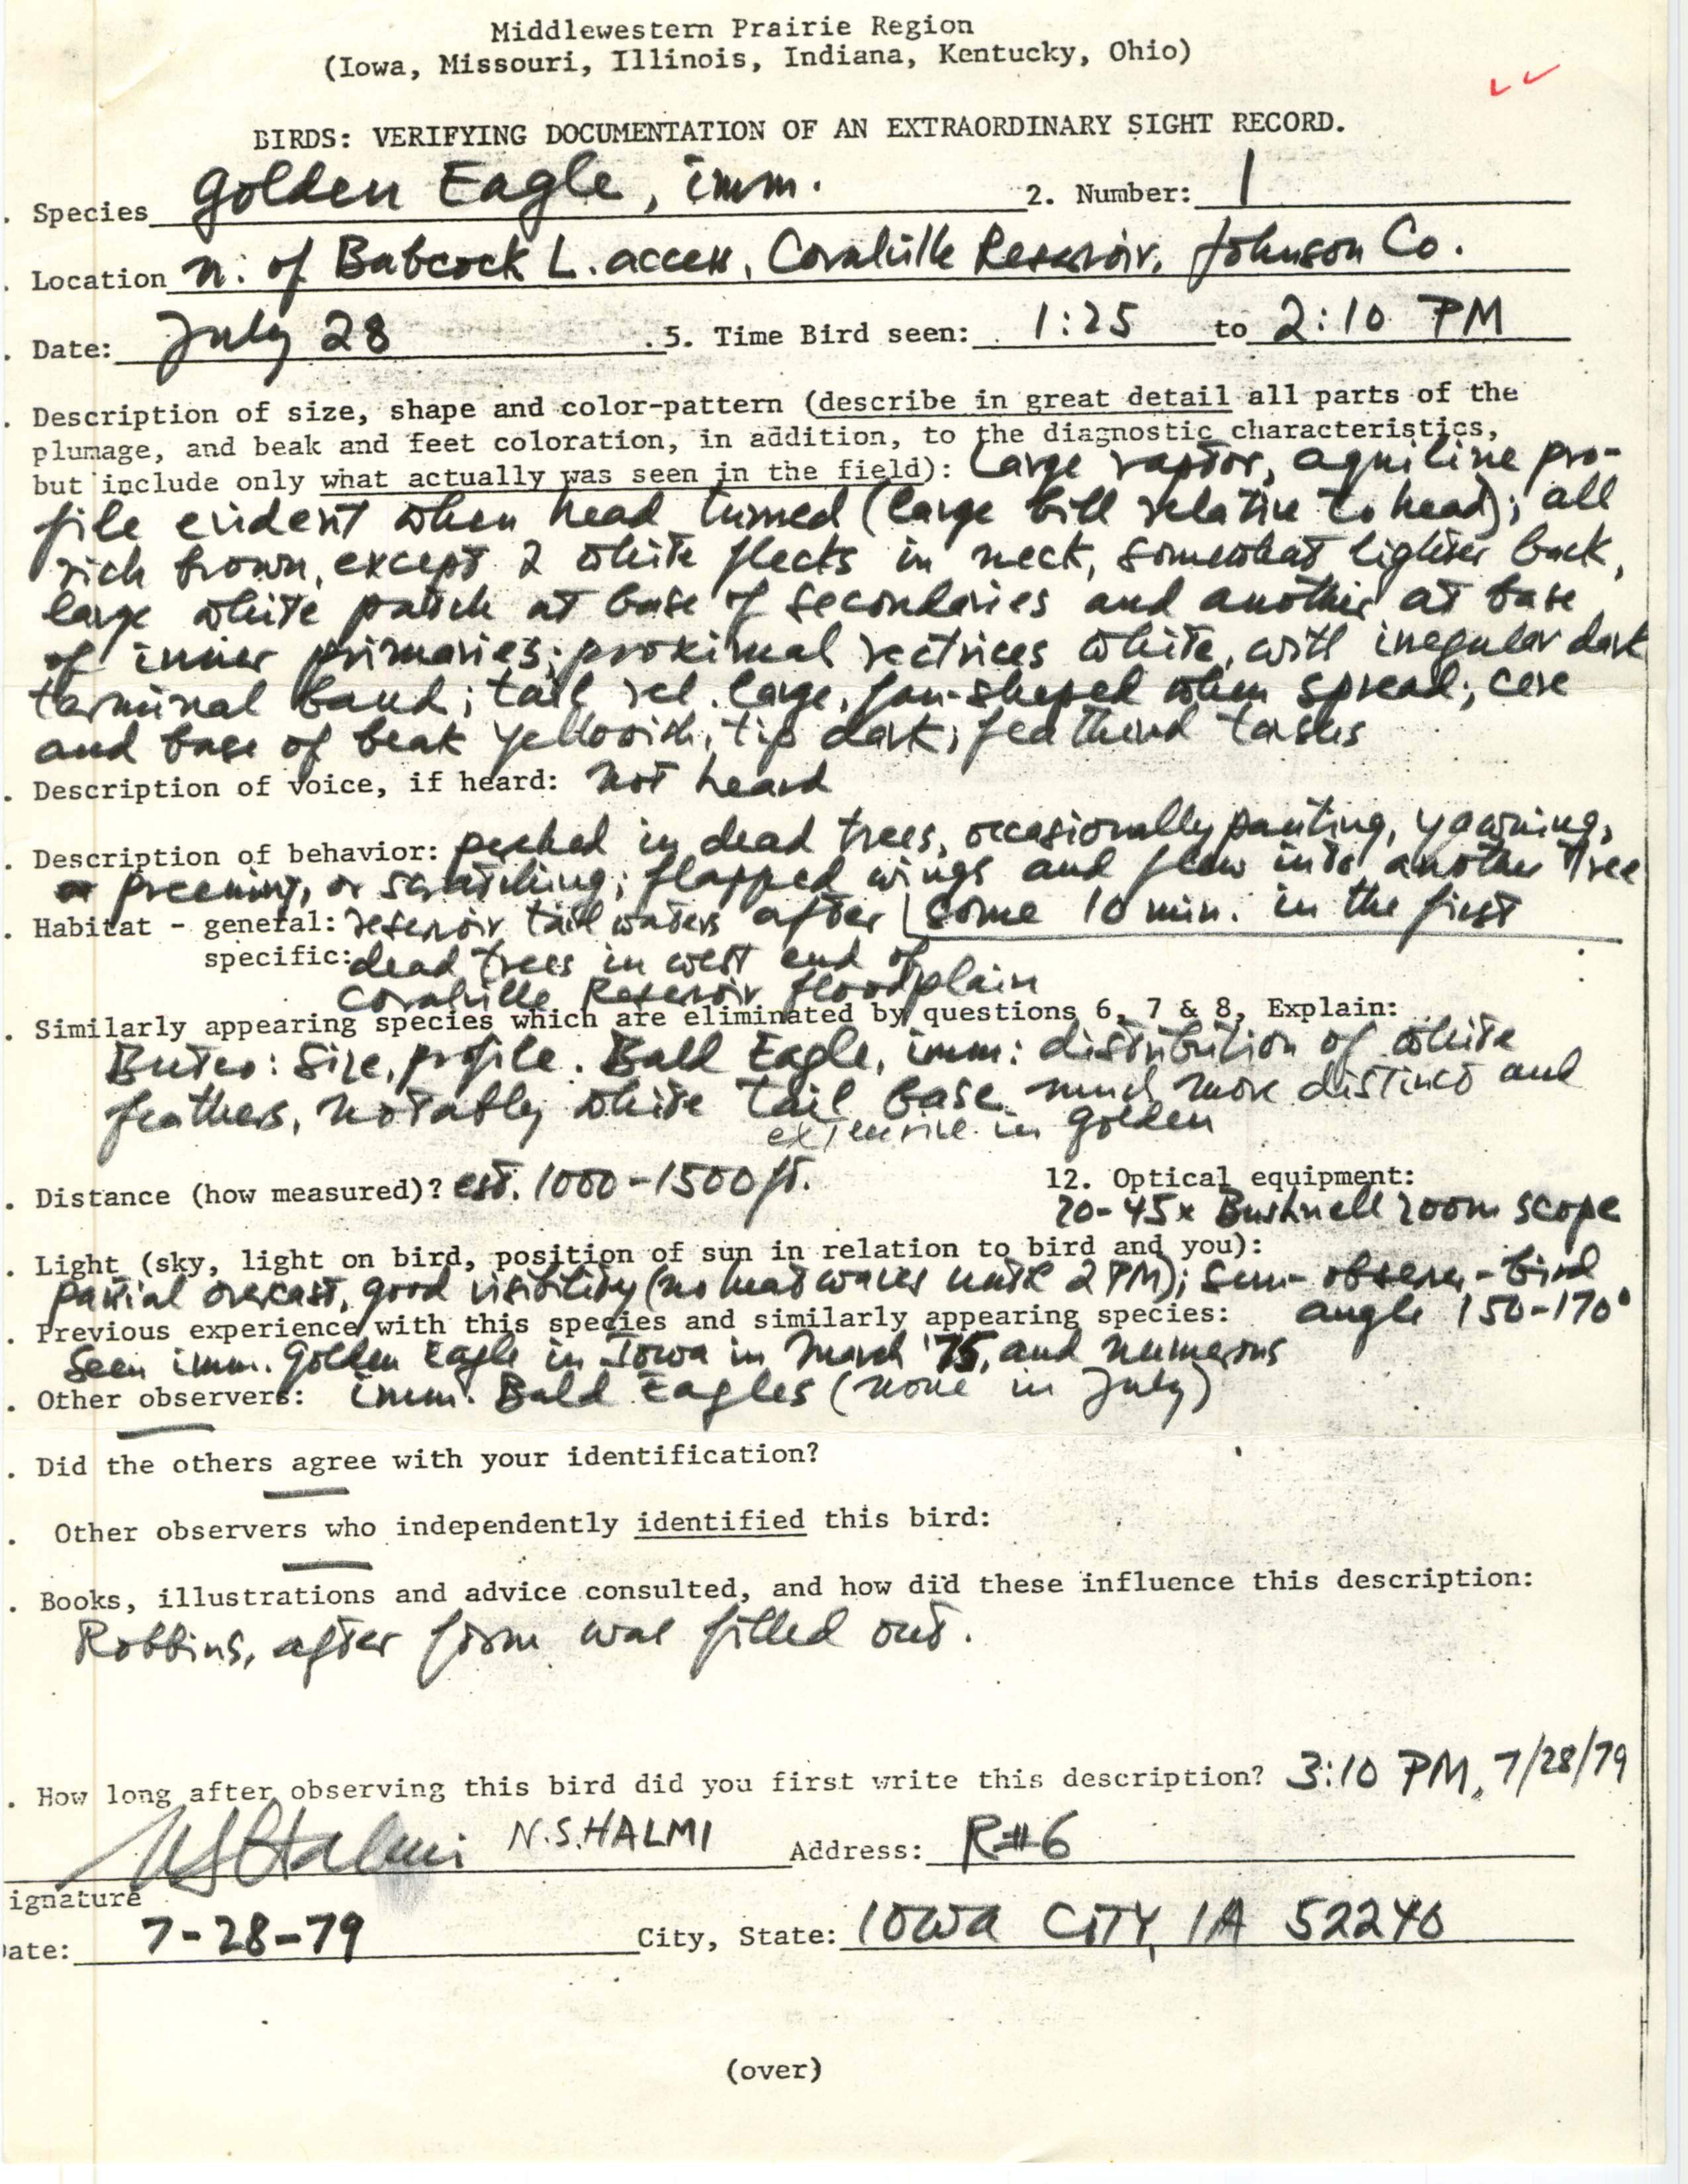 Rare bird documentation form for Golden Eagle at Babcock Access at Coralville Lake, 1979